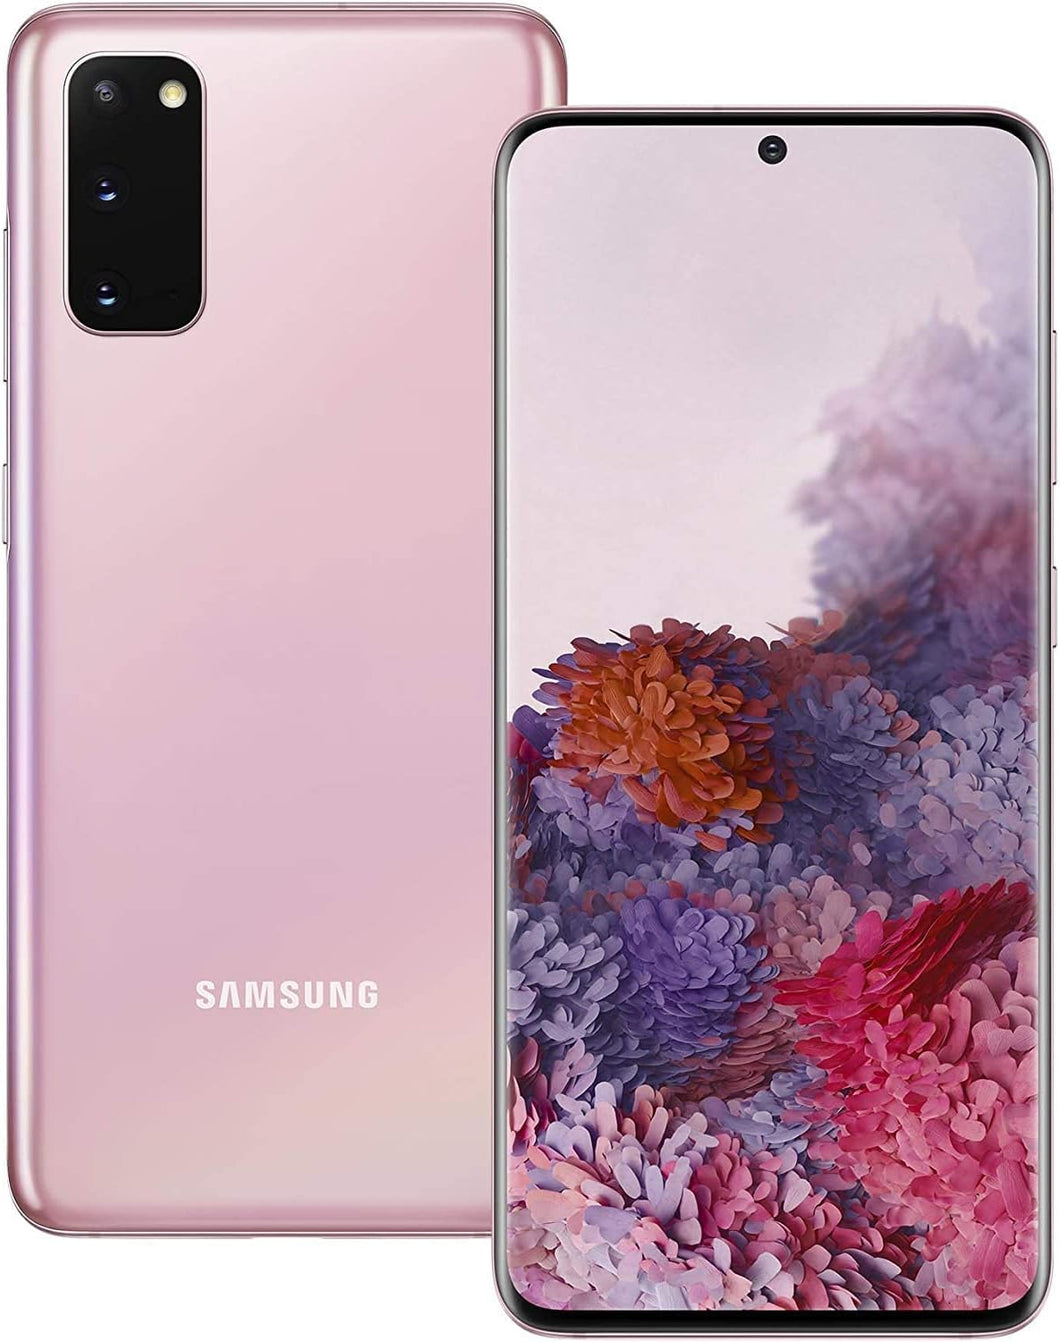 Galaxy S20 5G 128GB - Cloud Pink - Fully unlocked (GSM & CDMA)